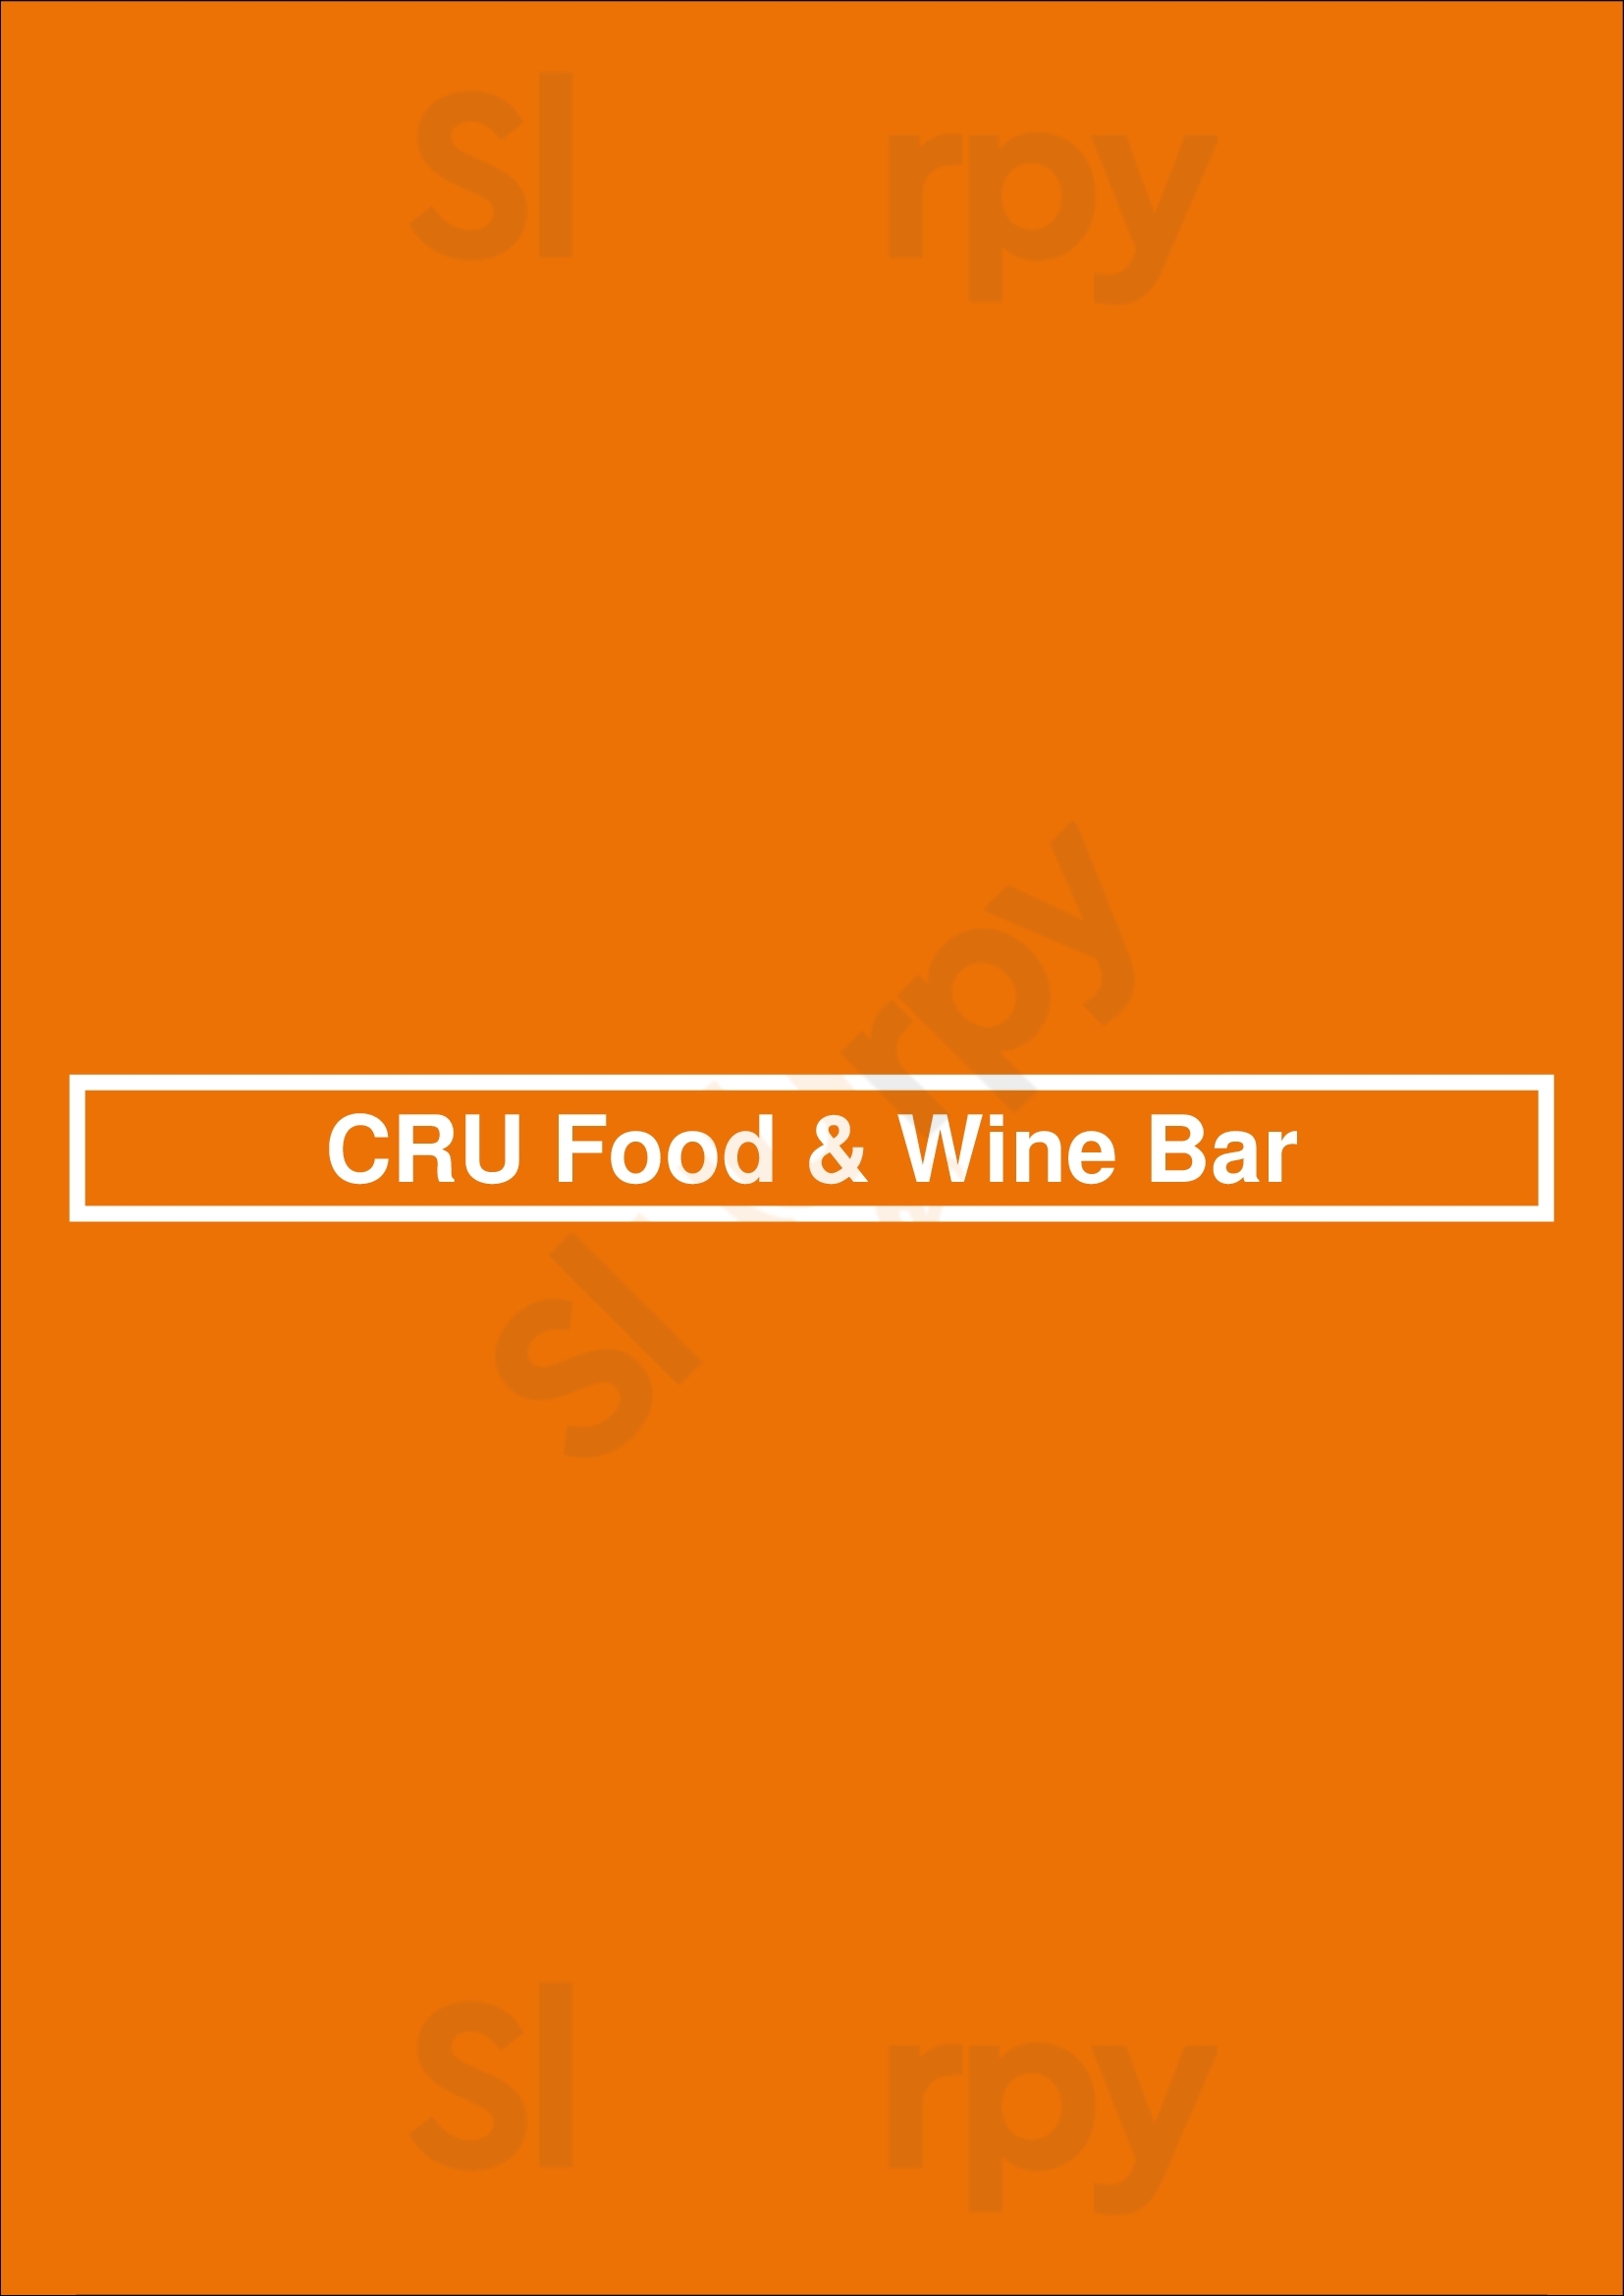 Cru Food & Wine Bar Plano Menu - 1